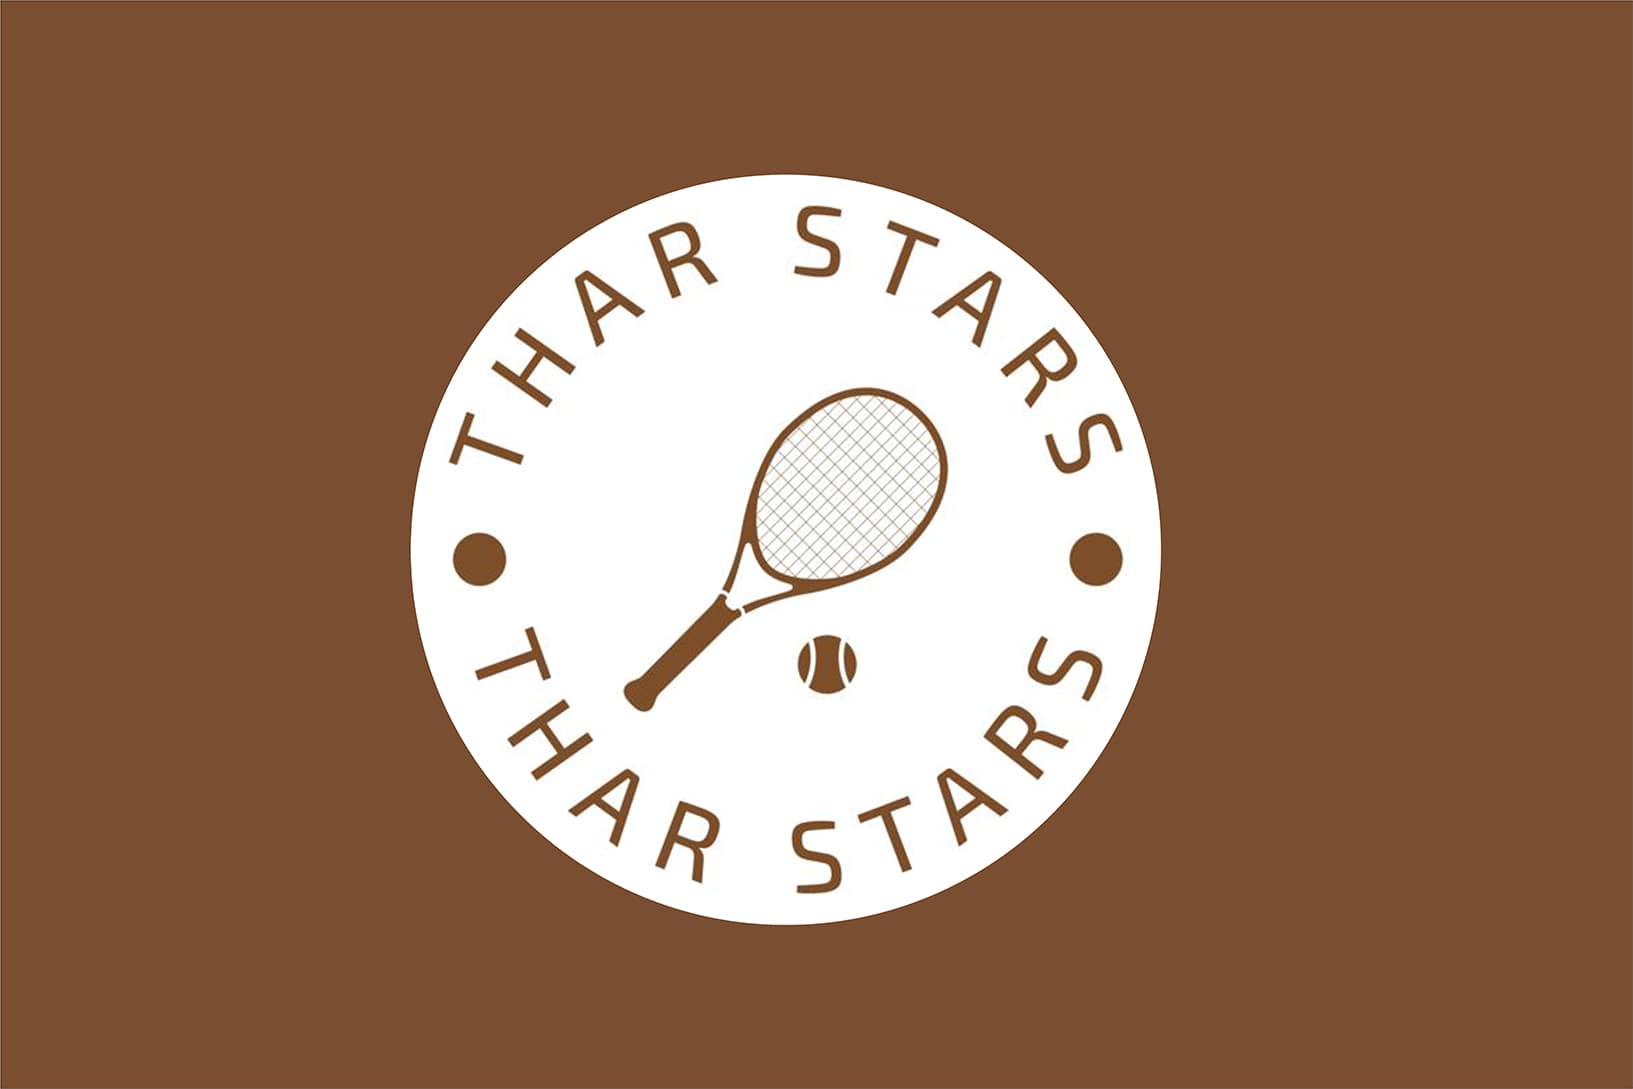 Thar Stars